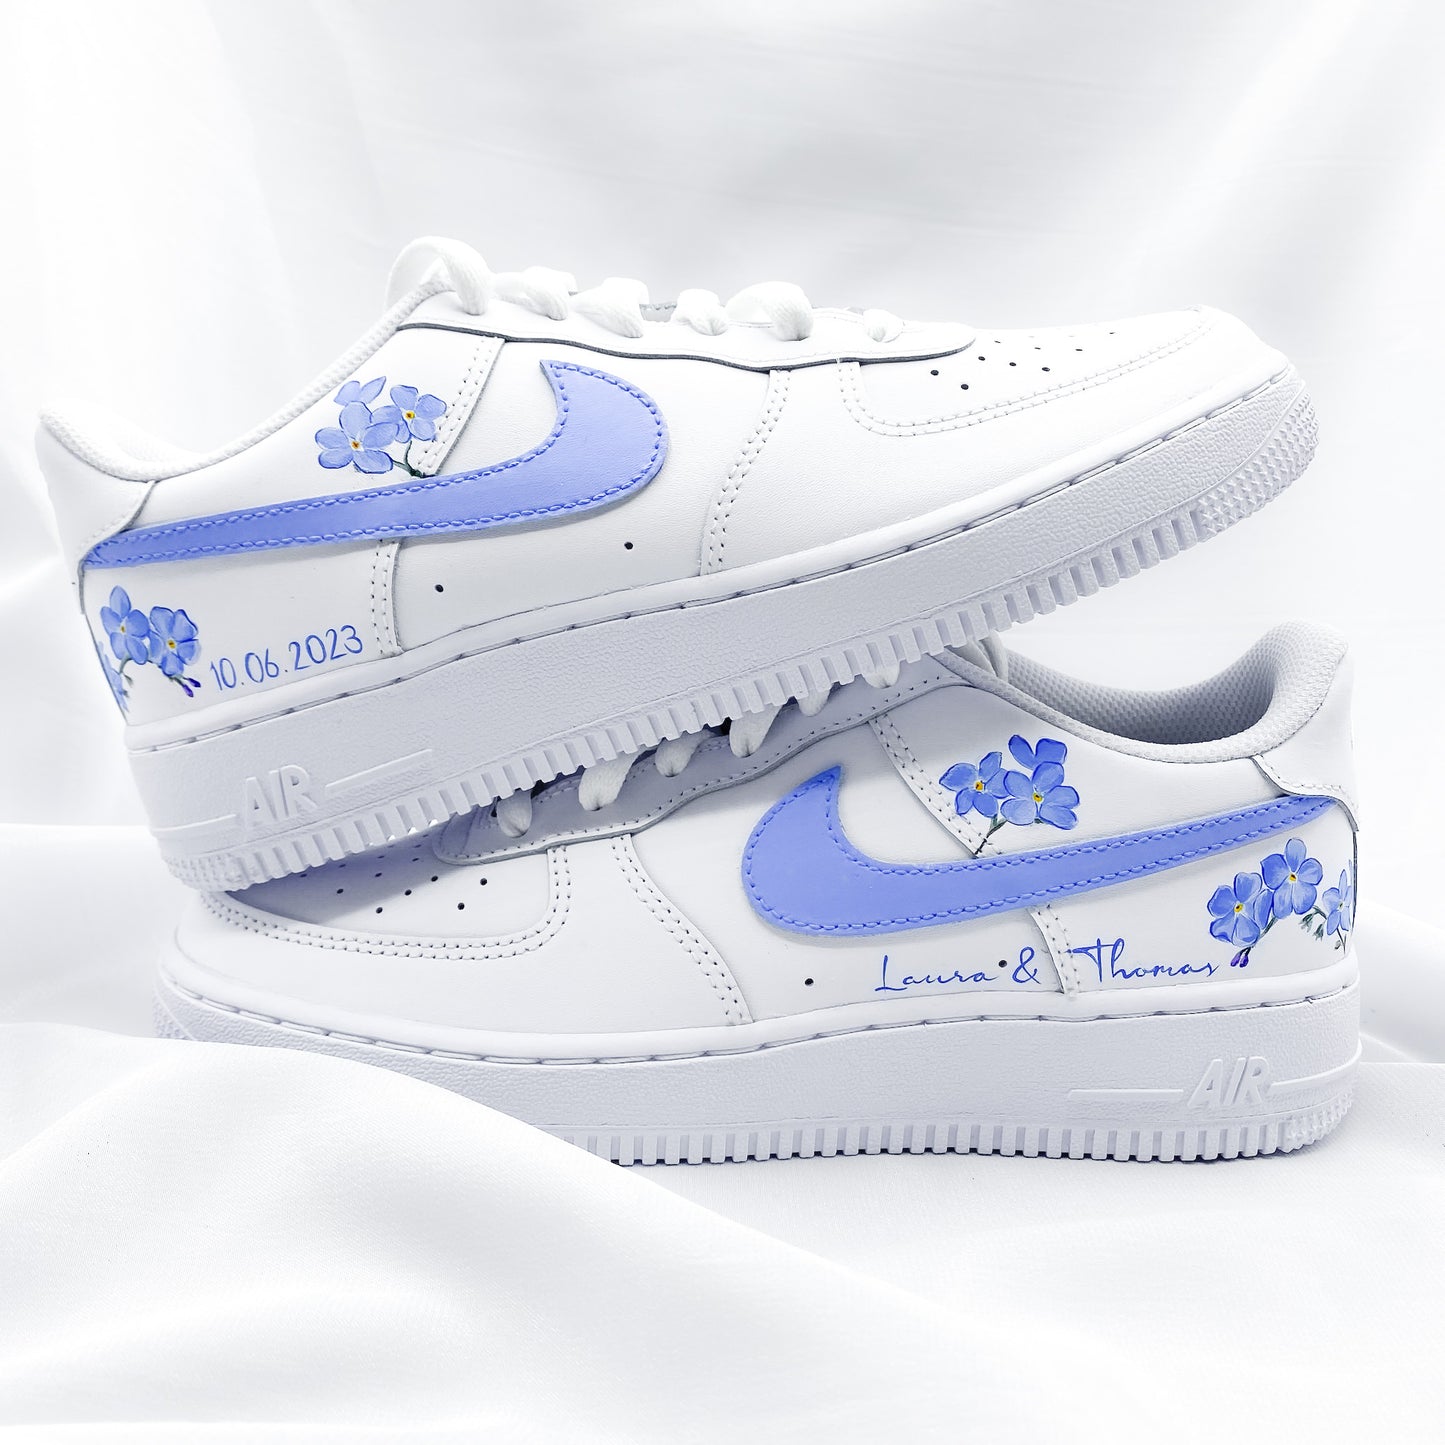 Custom Nike Air Force 1 Brautsneaker Something Blue